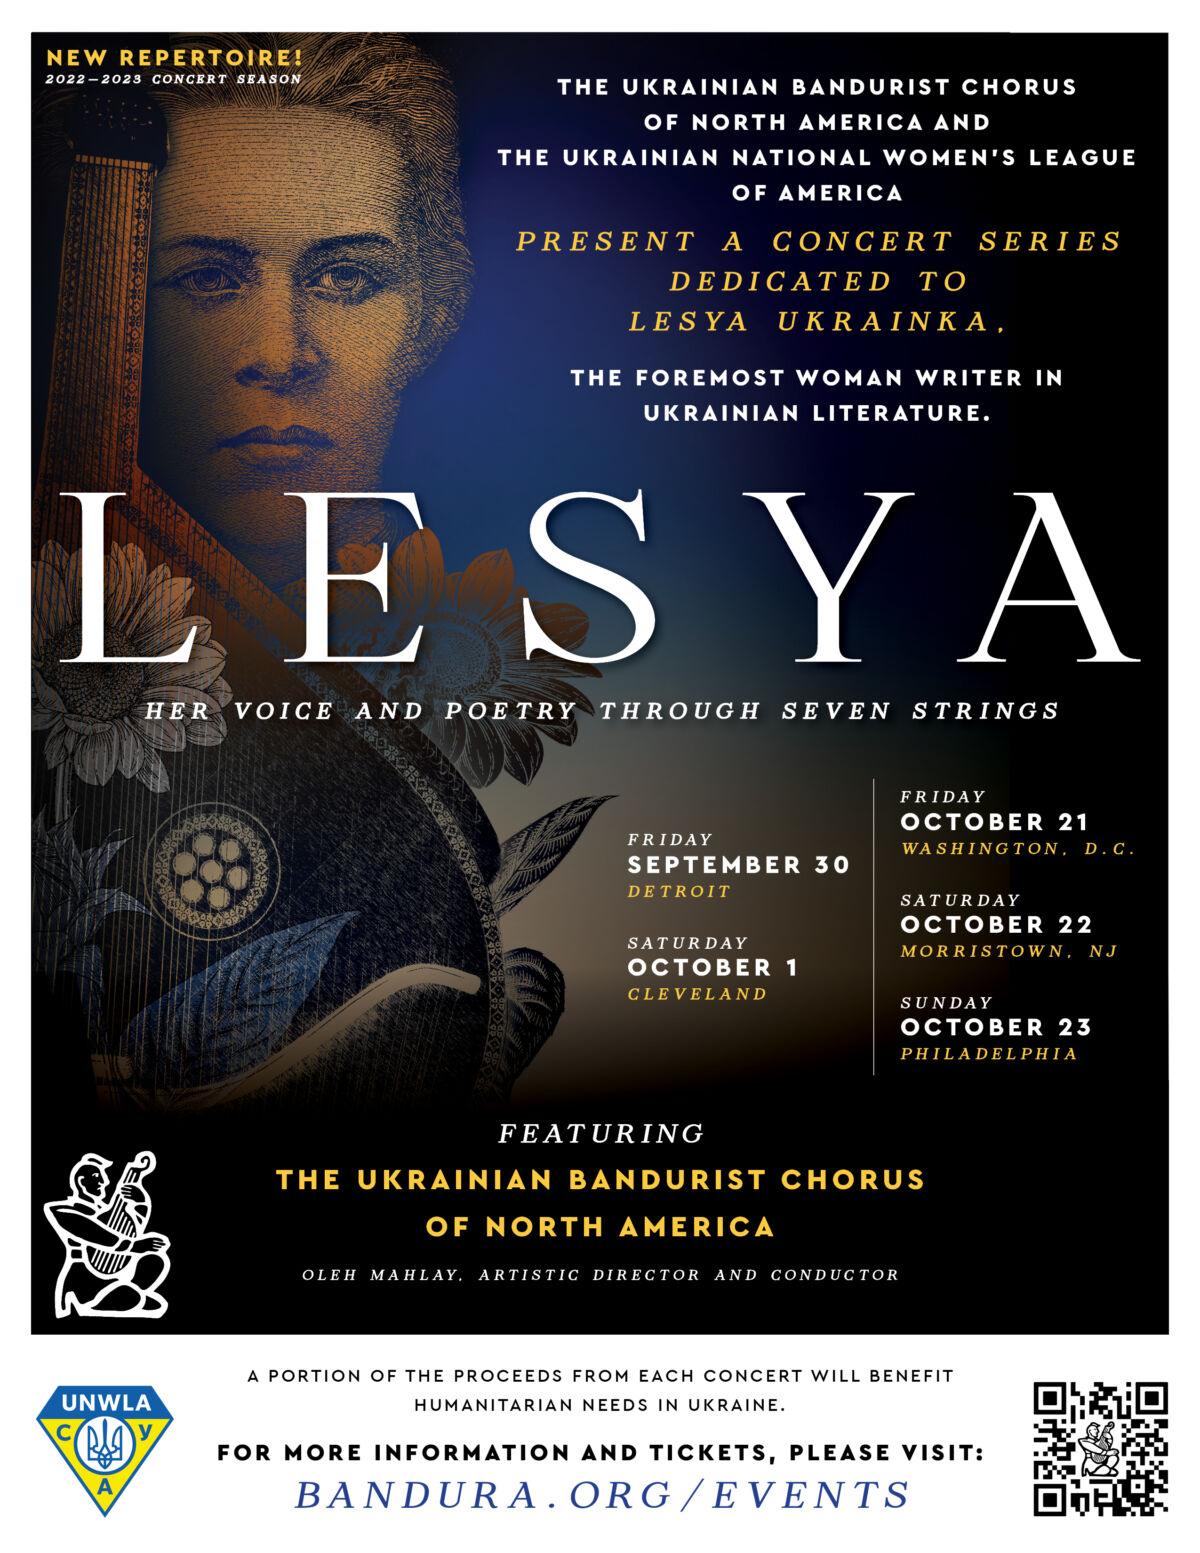 Lesya Ukrainka Concert Series FLYER 1 1 | UNWLA - Ukrainian National Womens League of America